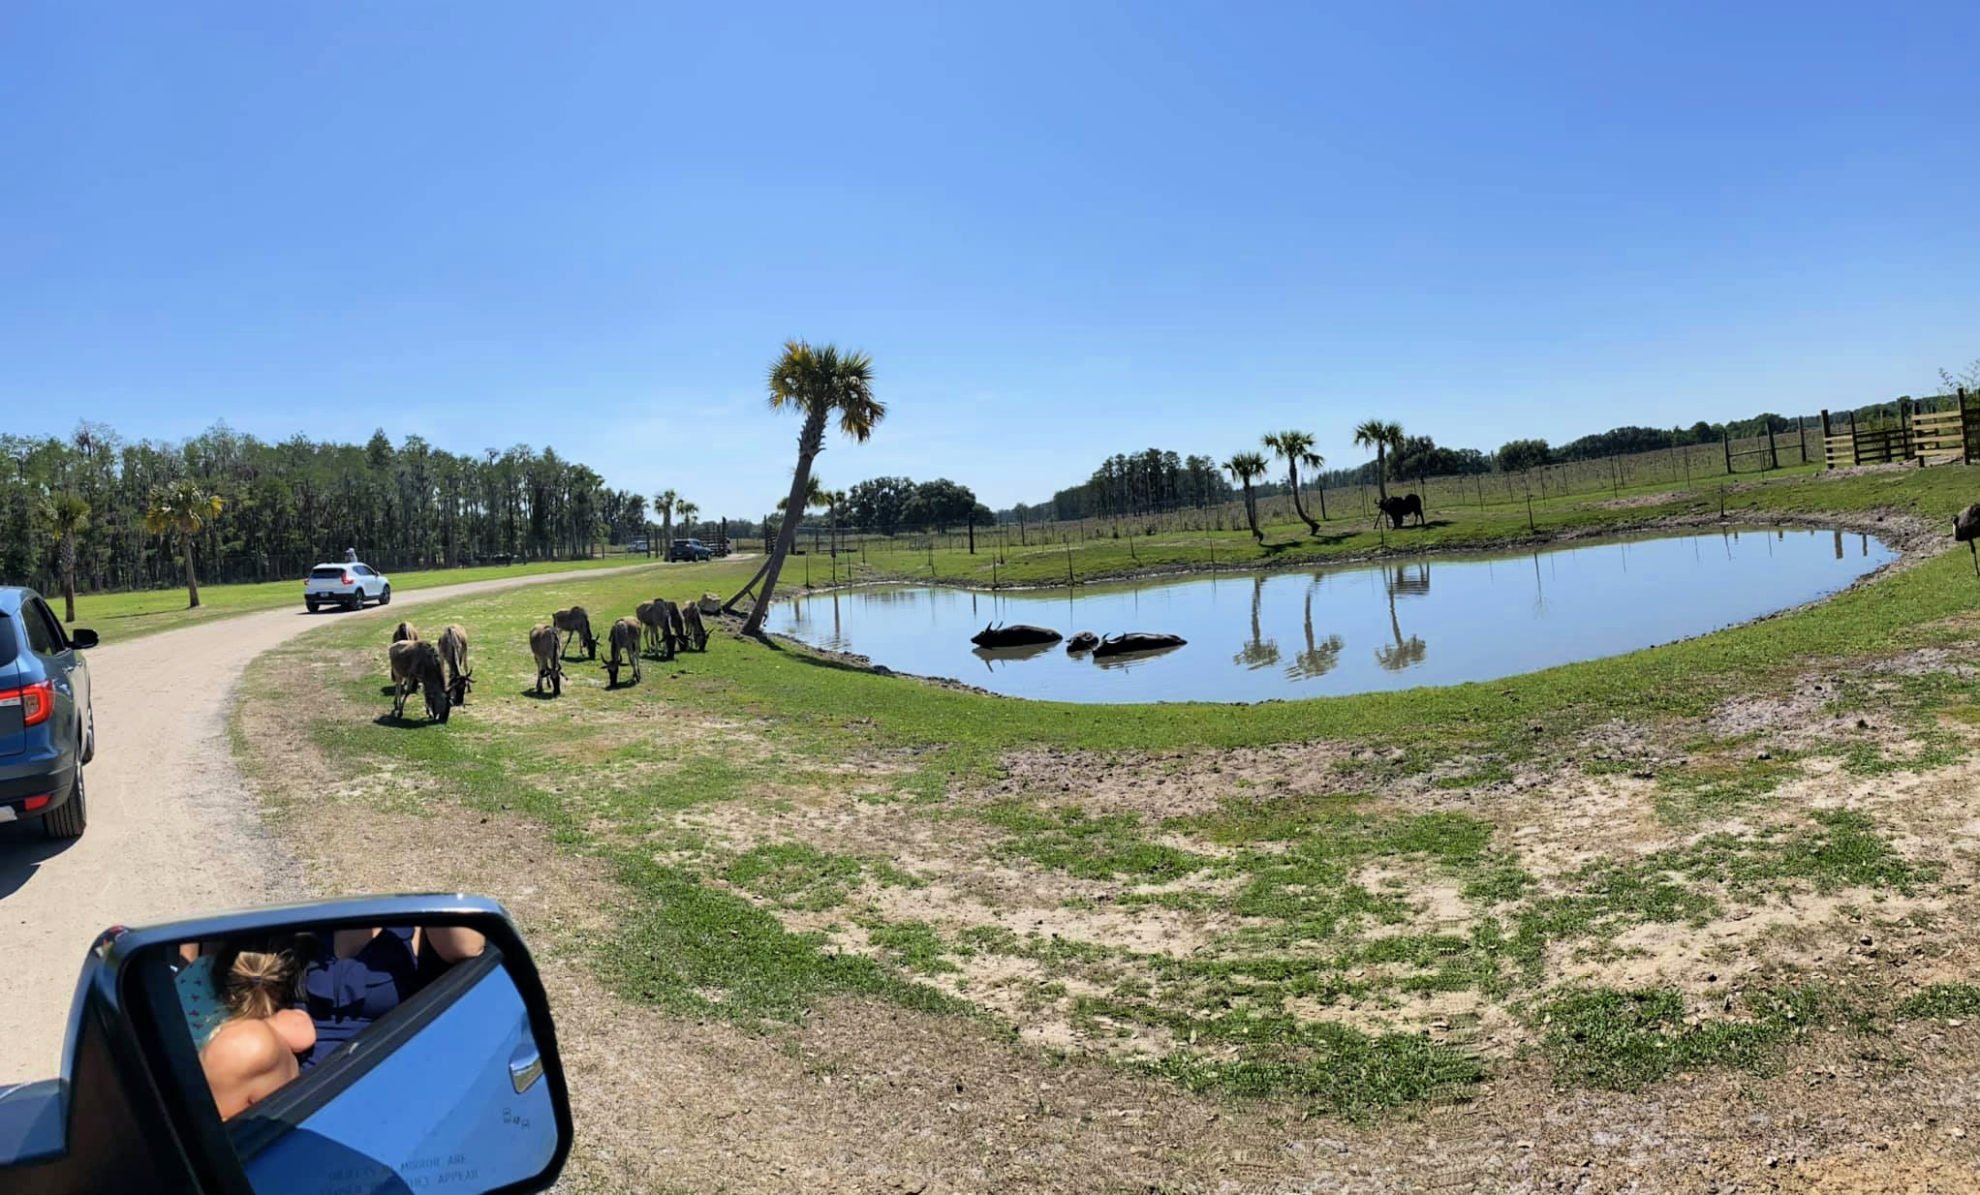 Water Buffalo in the water at Wild Florida Drive-Thru Safari Park